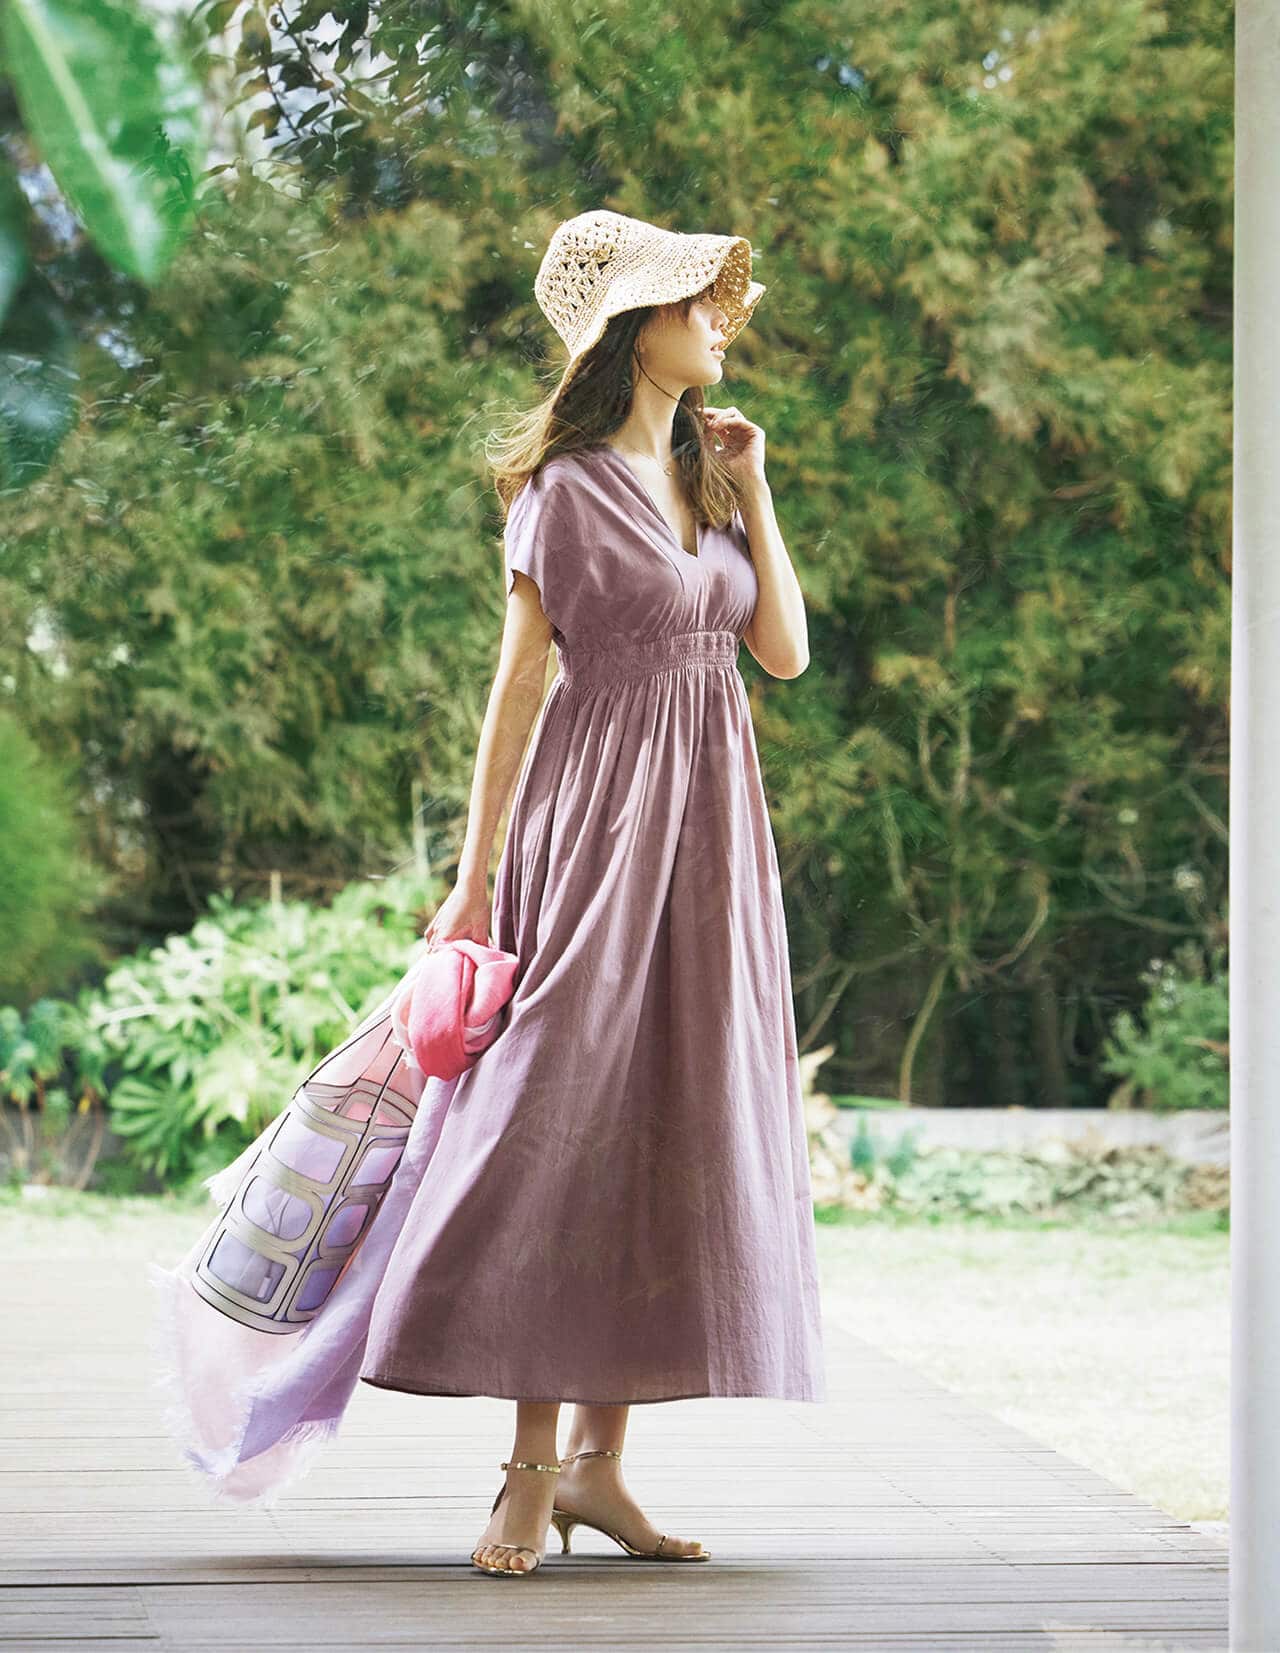 【MARIHA】 夏の光のドレス  ¥ 28,600  Nadeshiko